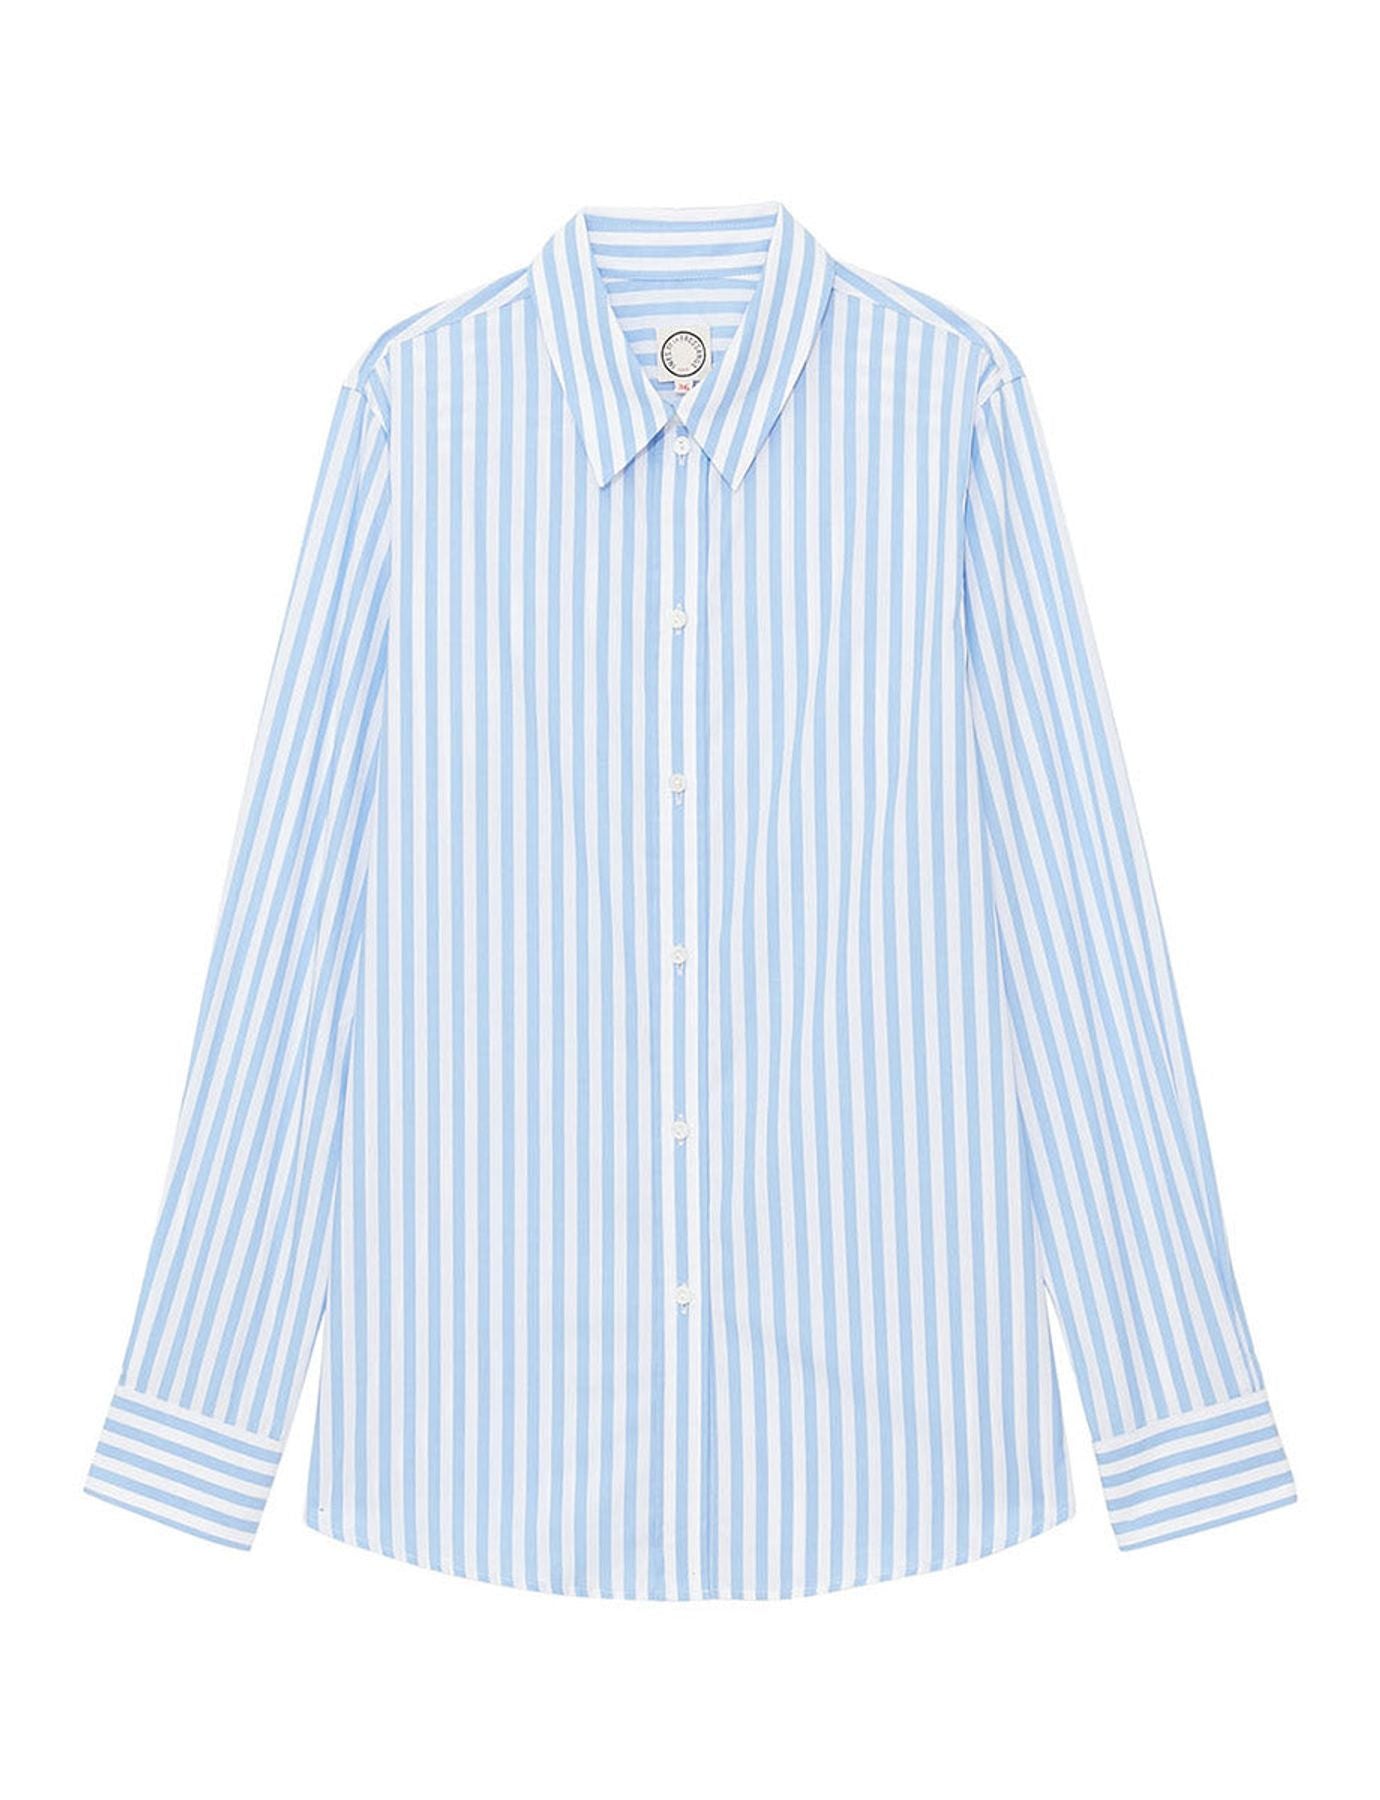 chemise-martin-rayee-bleu-et-blanc